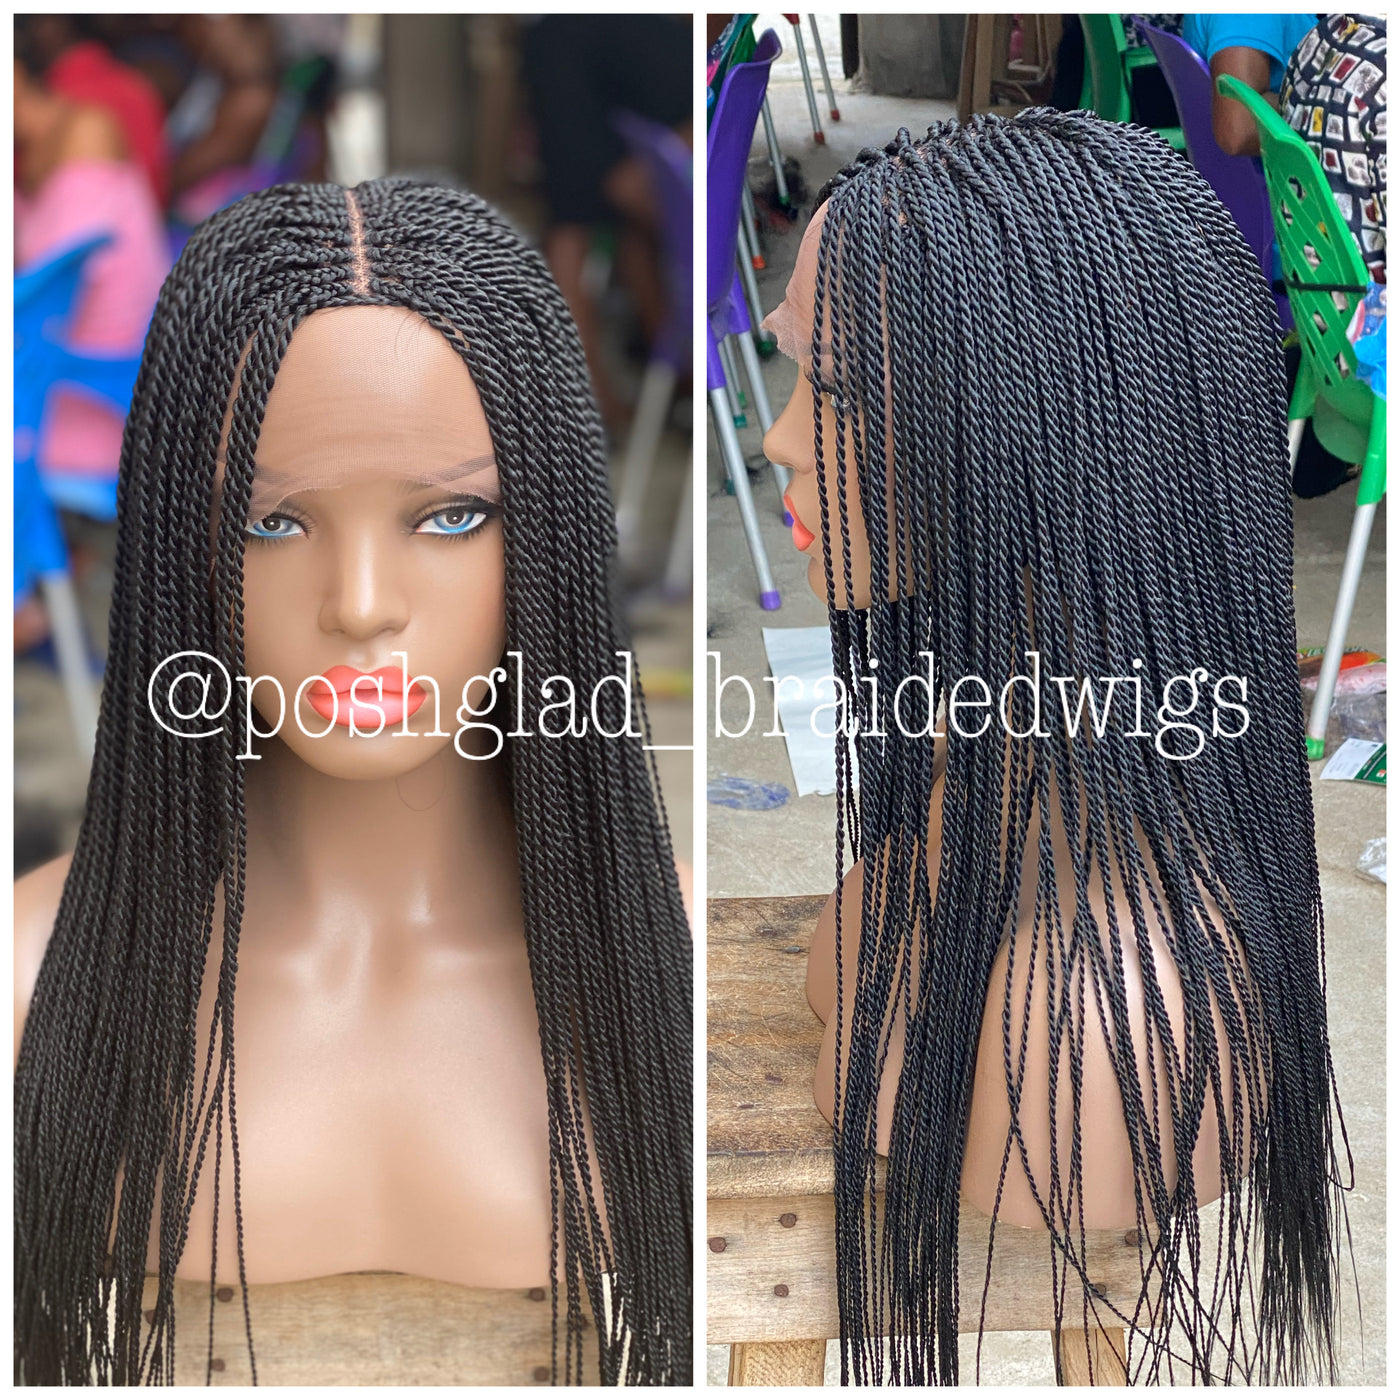 Senegalese Twist - Senegalese Twist Wig - Sadia Poshglad Braided Wigs